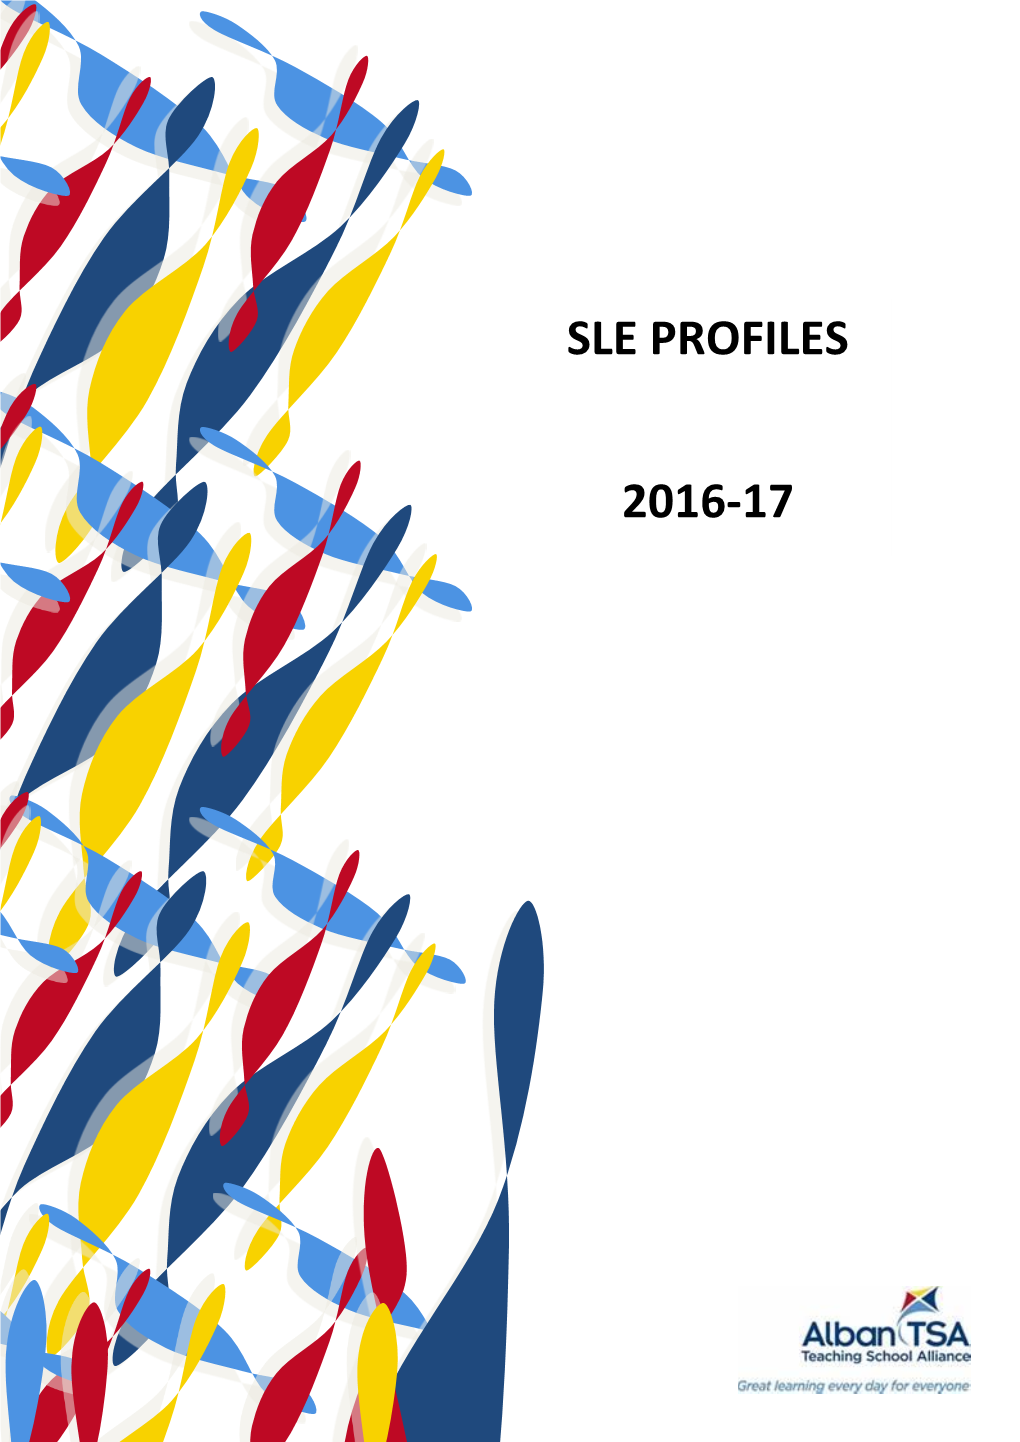 Sle Profiles 2016-17